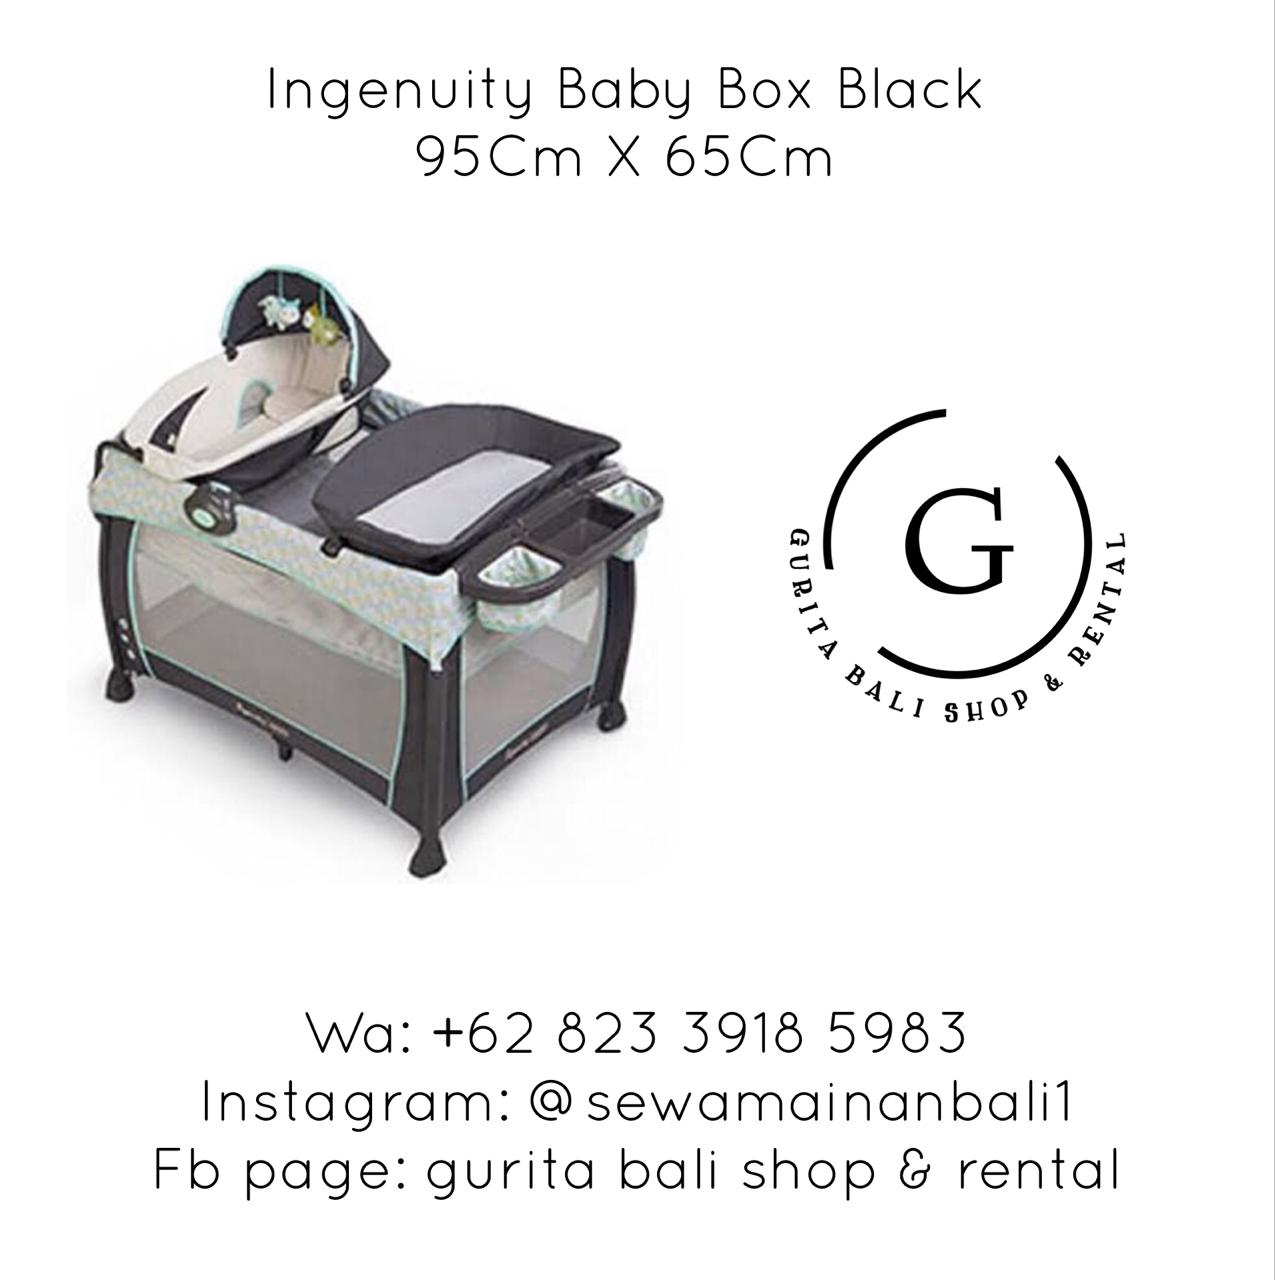 INGENUITY BABY BOX BLACK 1